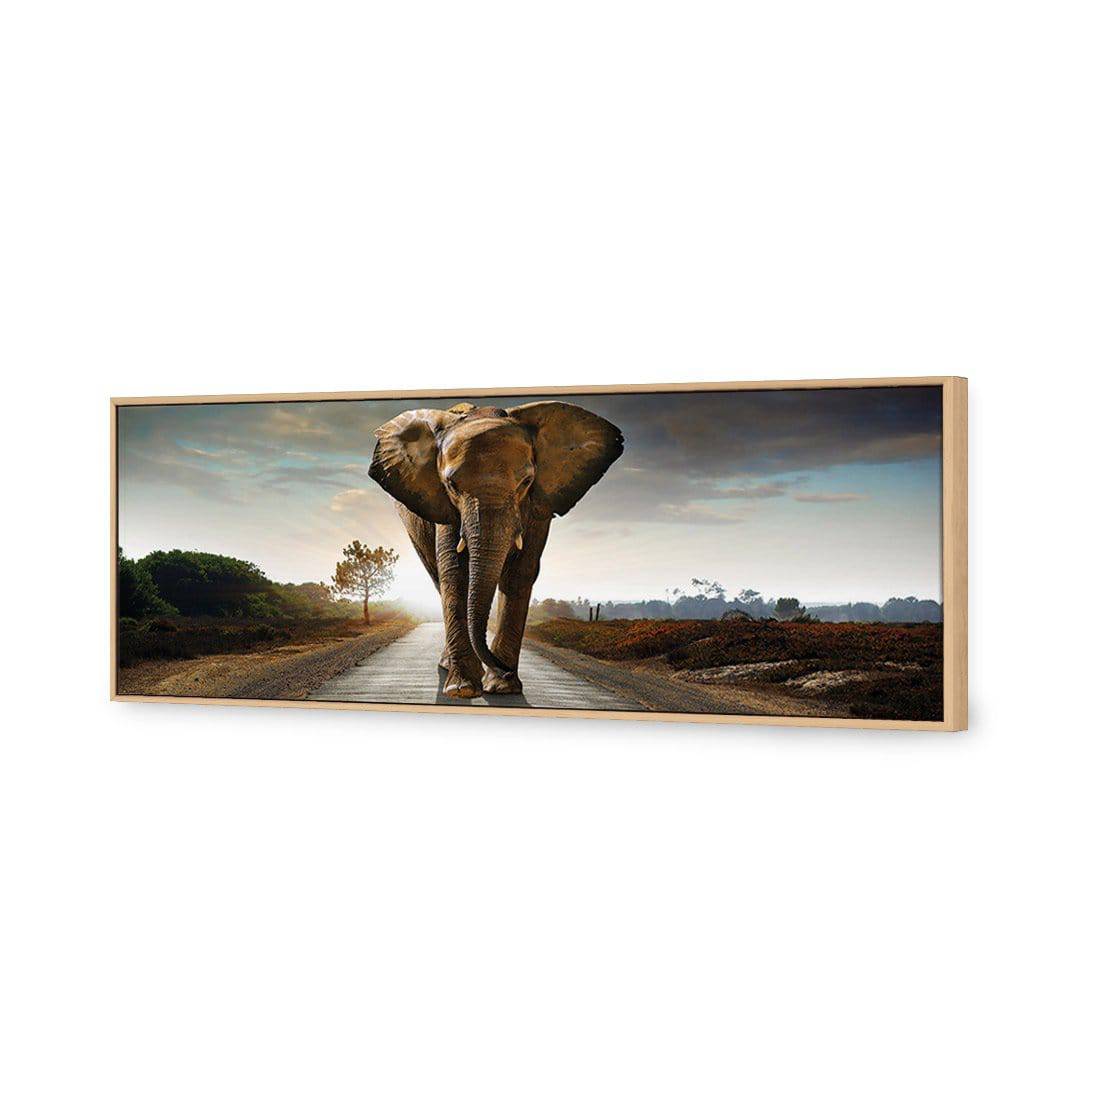 Determined Elephant (Long) Canvas Art-Canvas-Wall Art Designs-60x20cm-Canvas - Oak Frame-Wall Art Designs